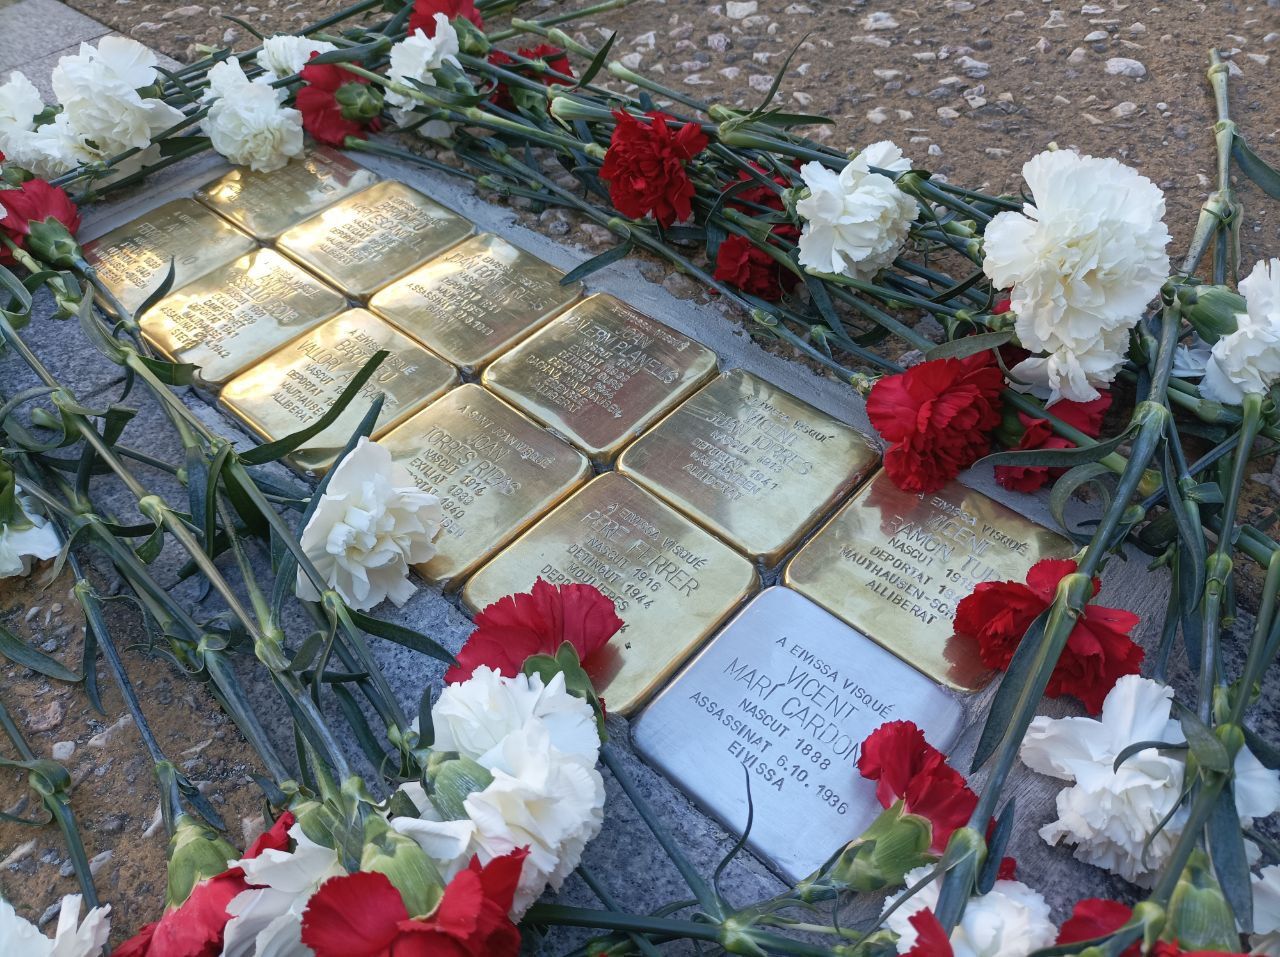 Eivissa col·loca devuit Stolpersteine dedicades a víctimes del nazisme i el franquisme